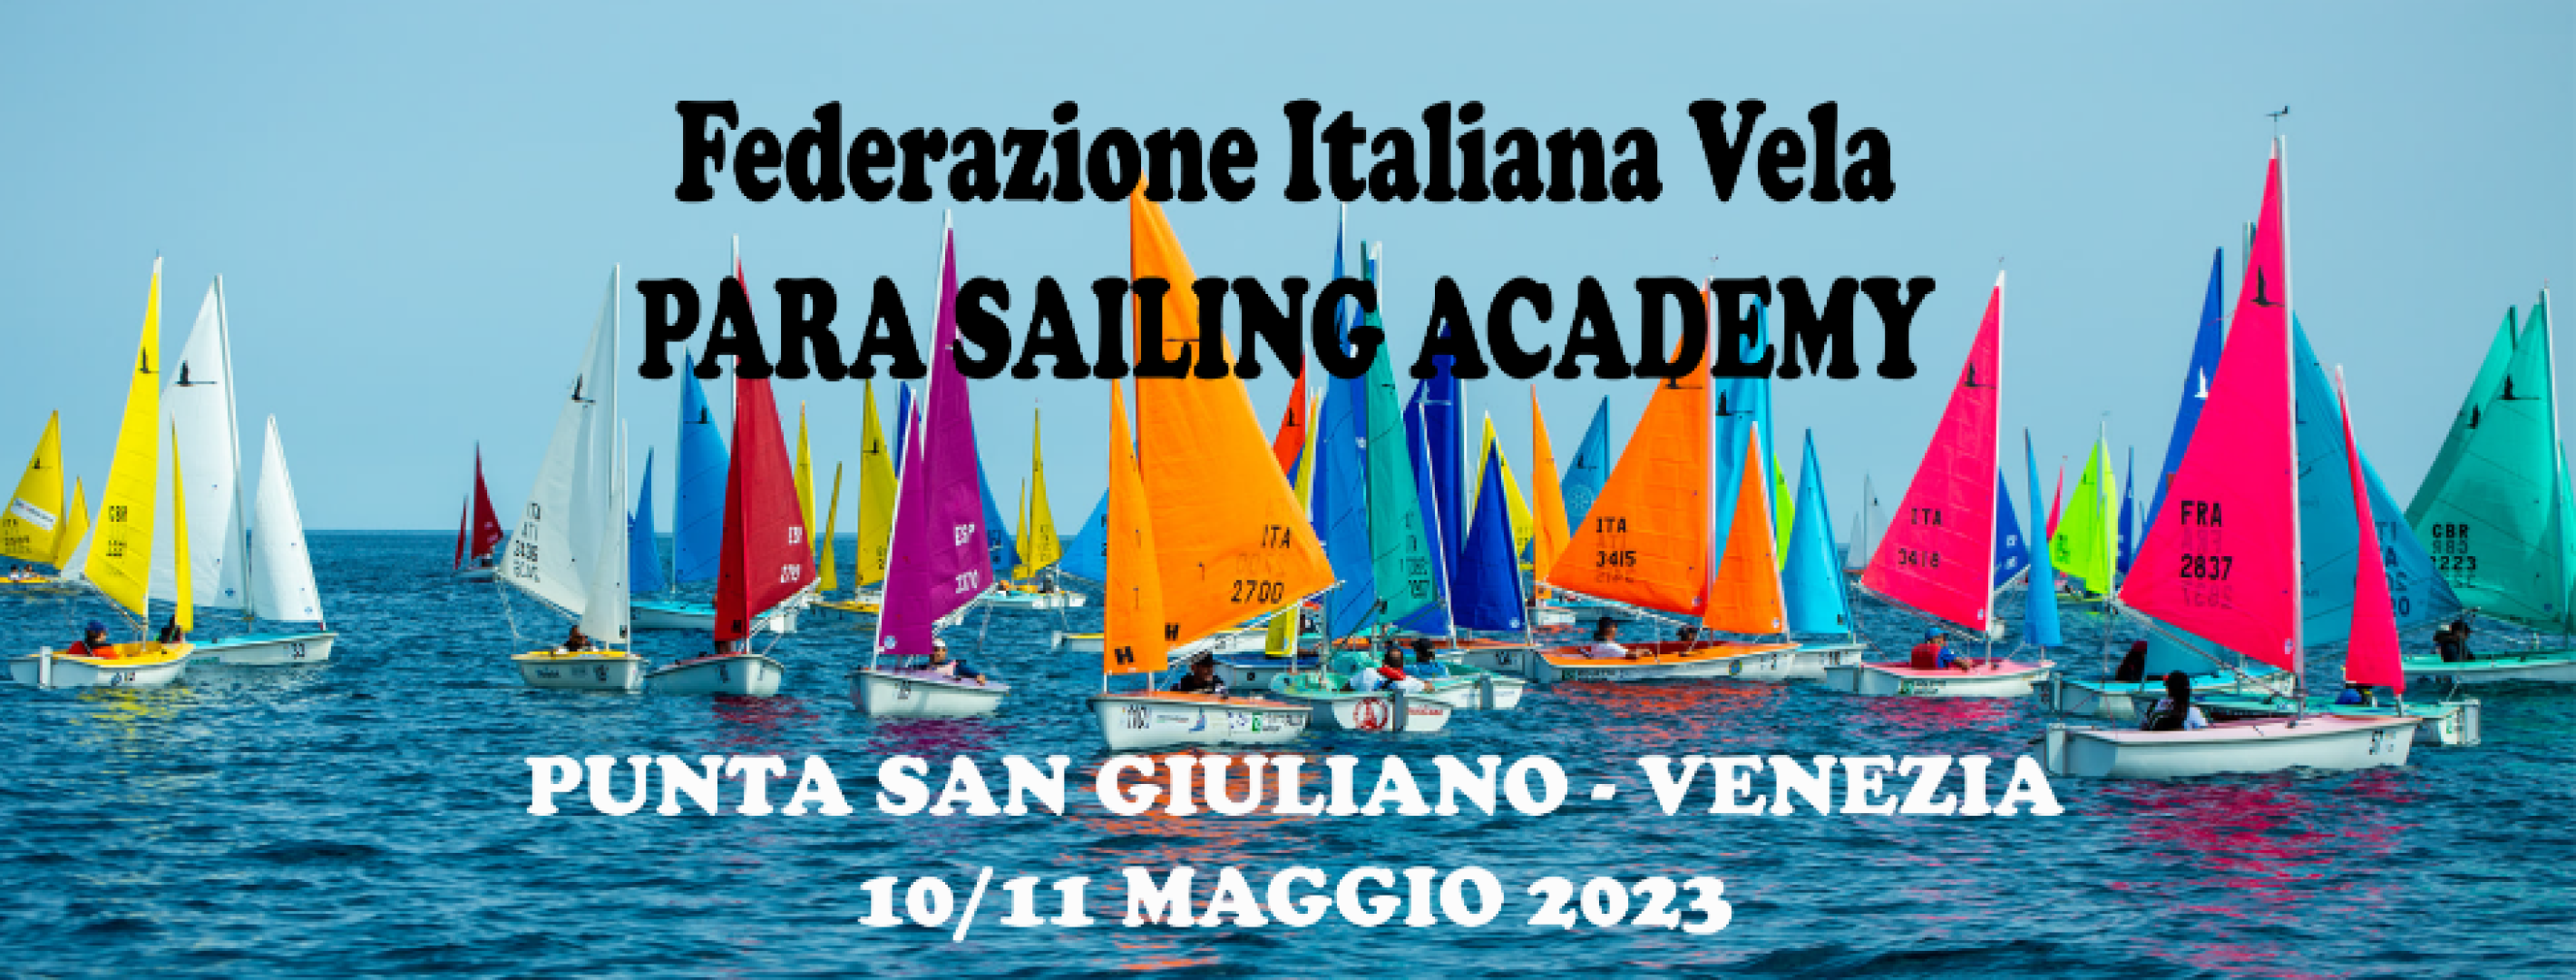 Para Sailing Academy dal 10 al 11 maggio a Mestre Venezia